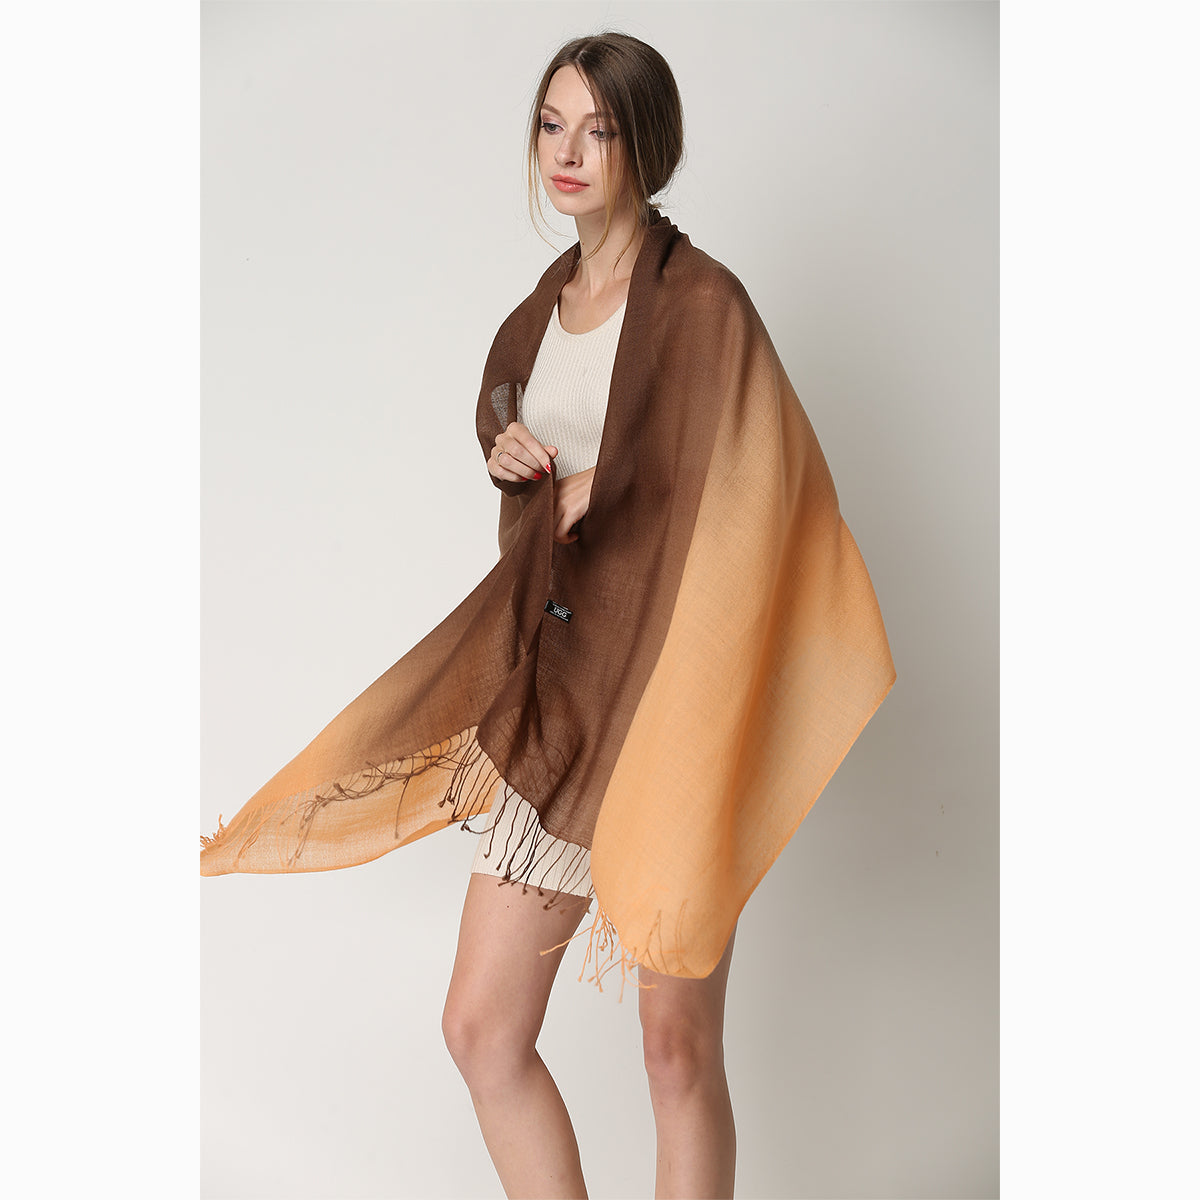 Ugg 100% Merino Wool Tie Dye Scarf Orange and Chocolate-Scarves-PEROZ Accessories